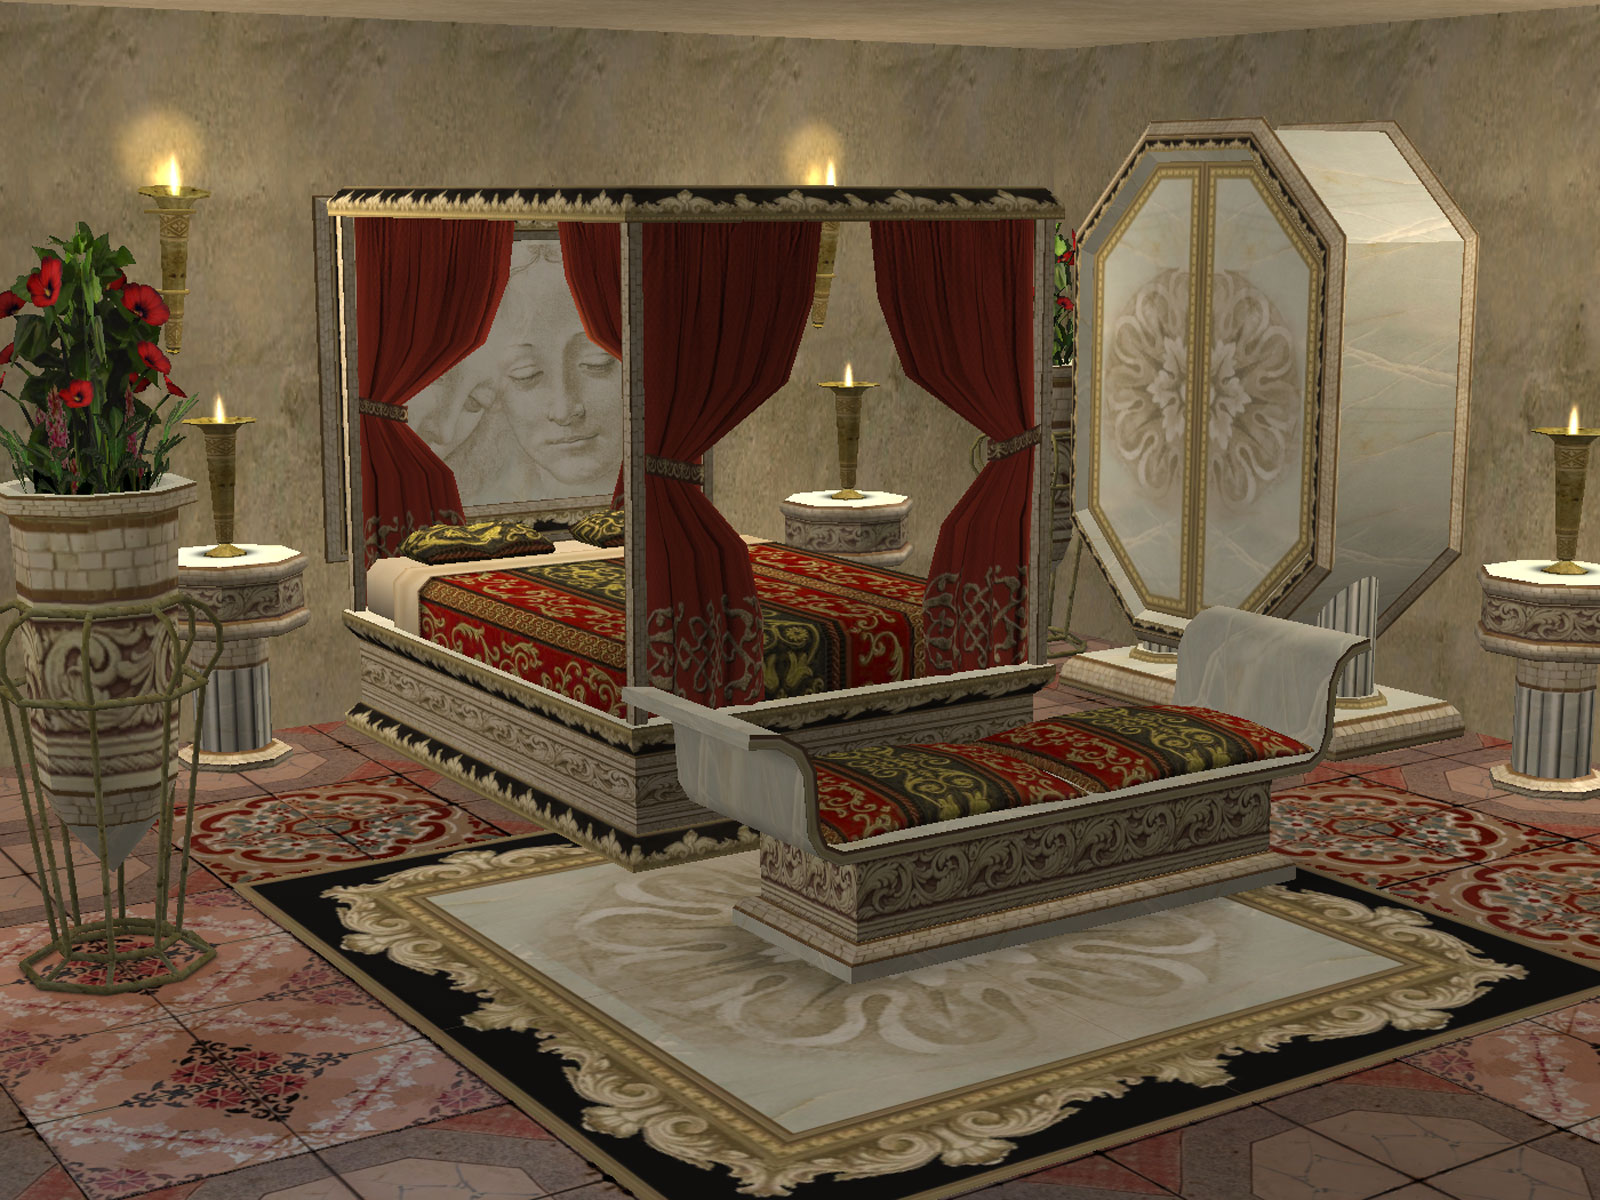 http://www.parsimonious.org/furniture2/files/k8-Amicus_Curiae_Bedroom.jpg